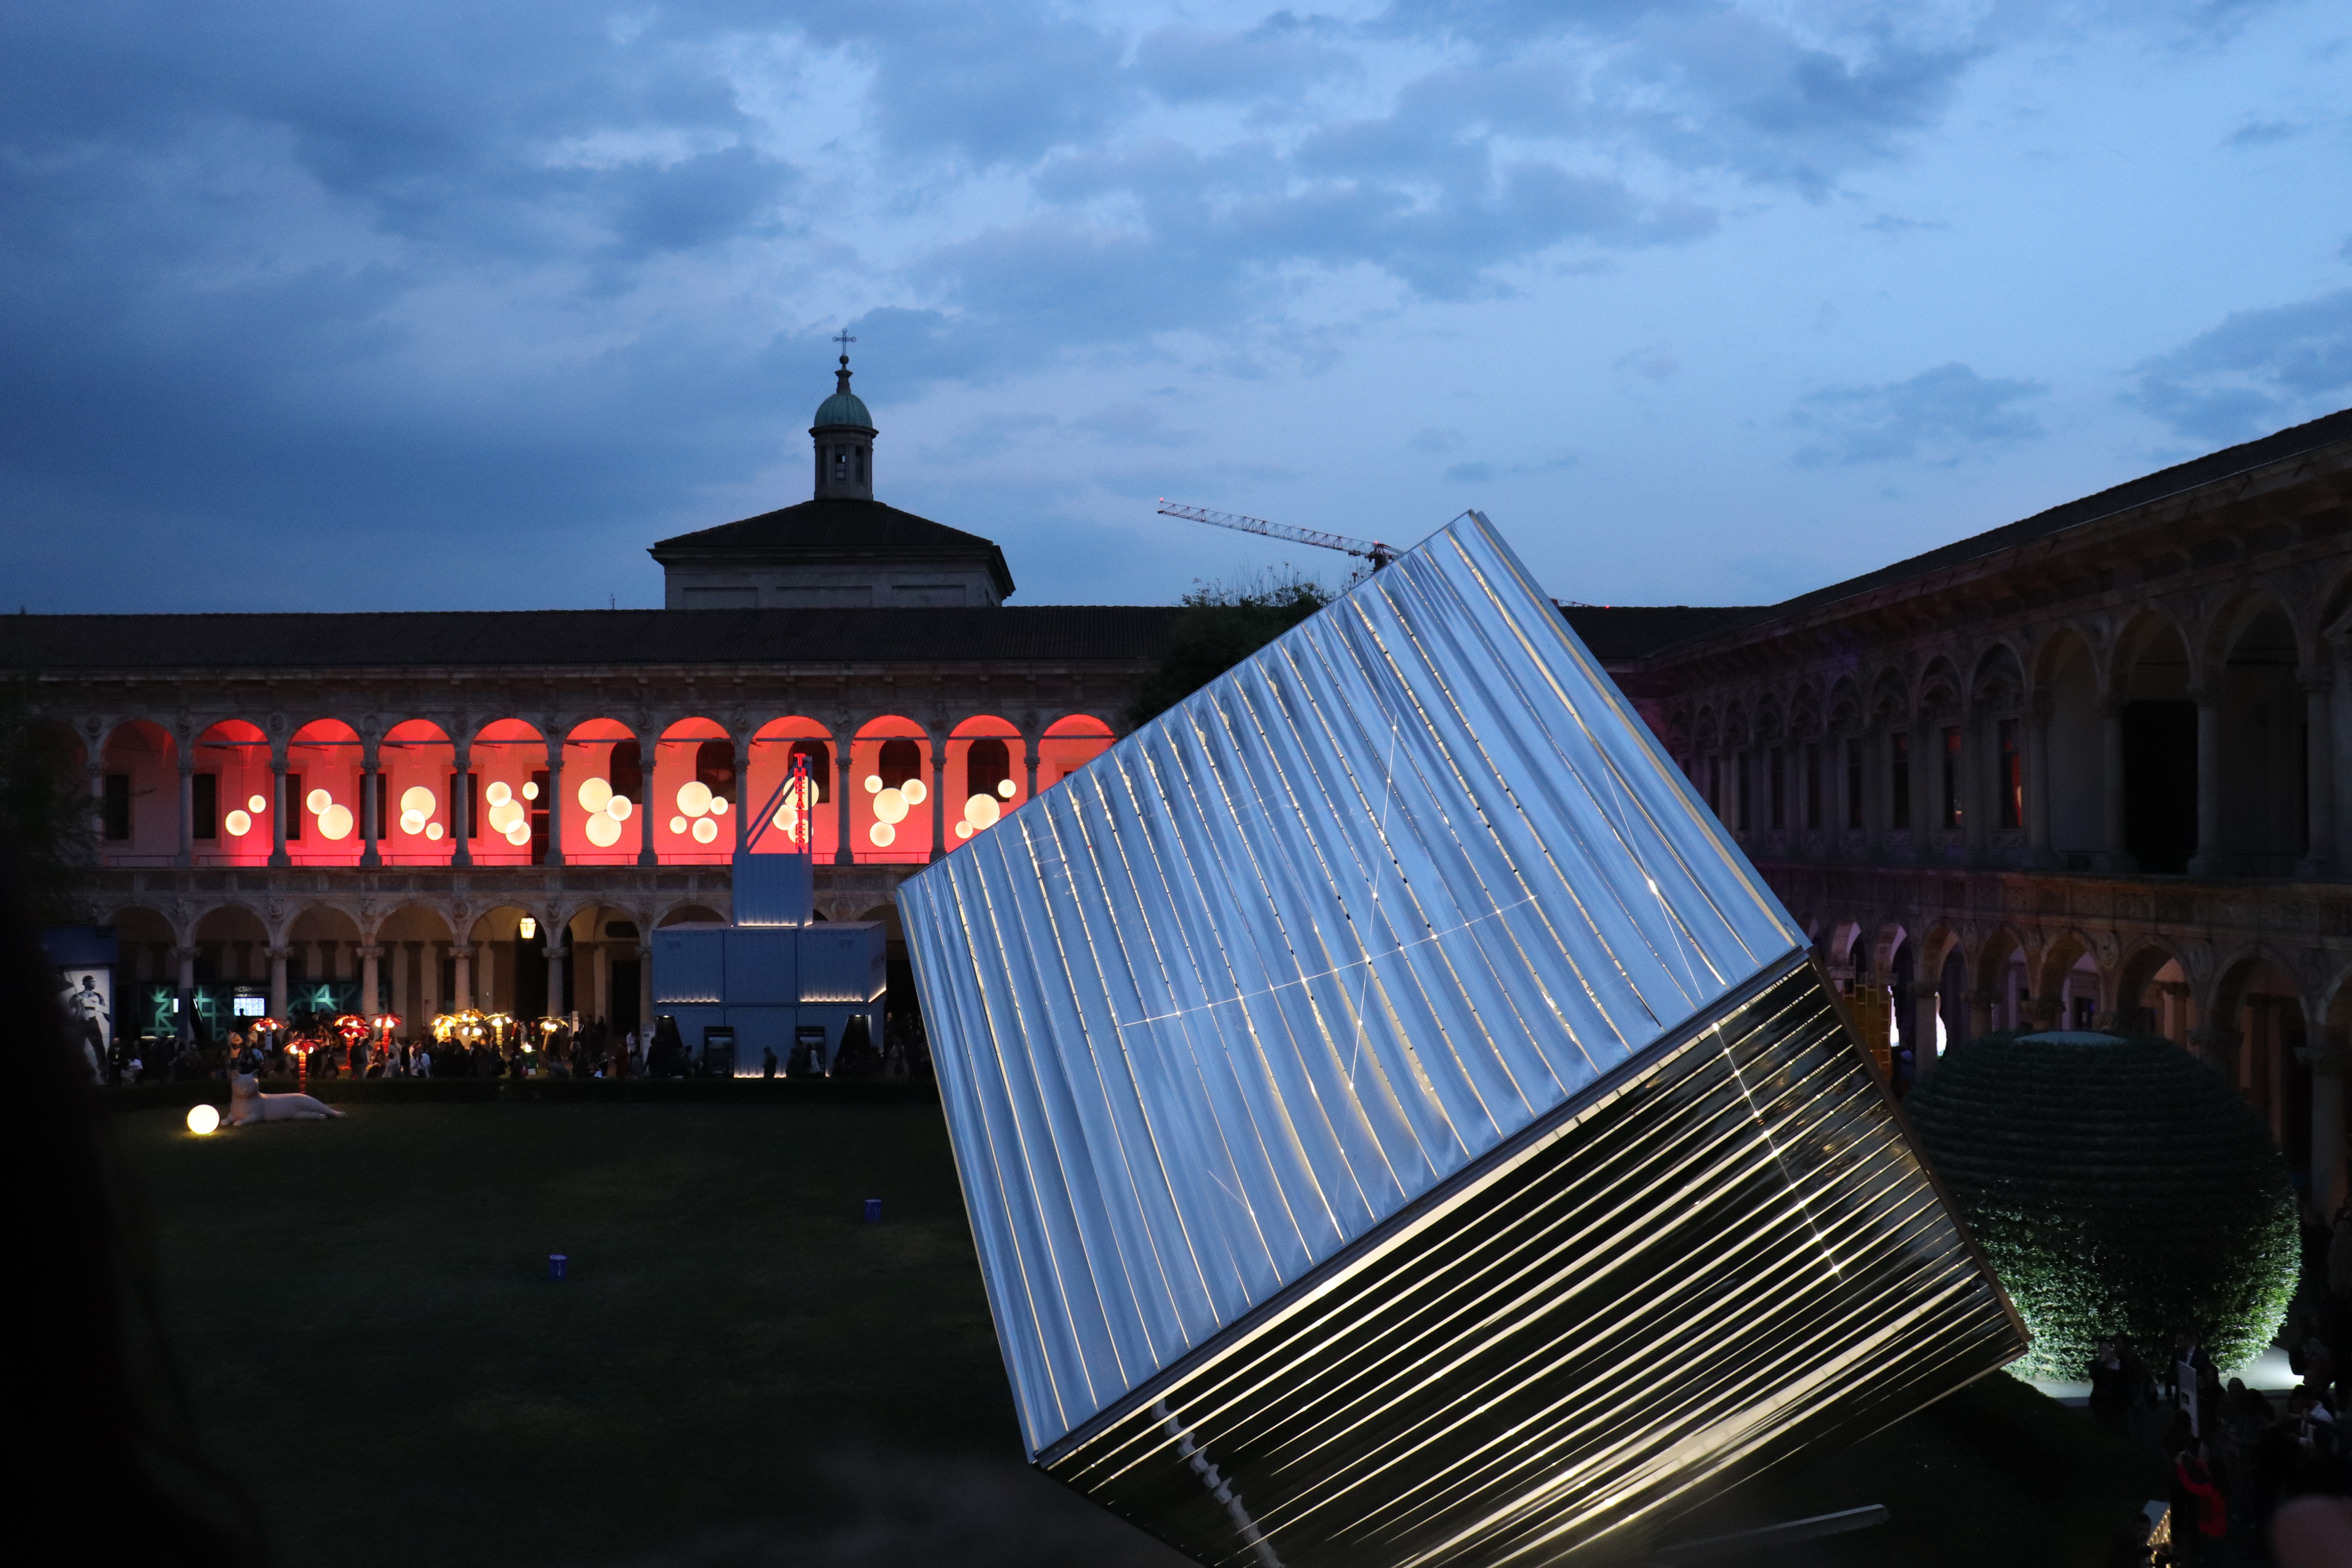 Milan Design Week 2023 Reflects an Evolving Design Industry